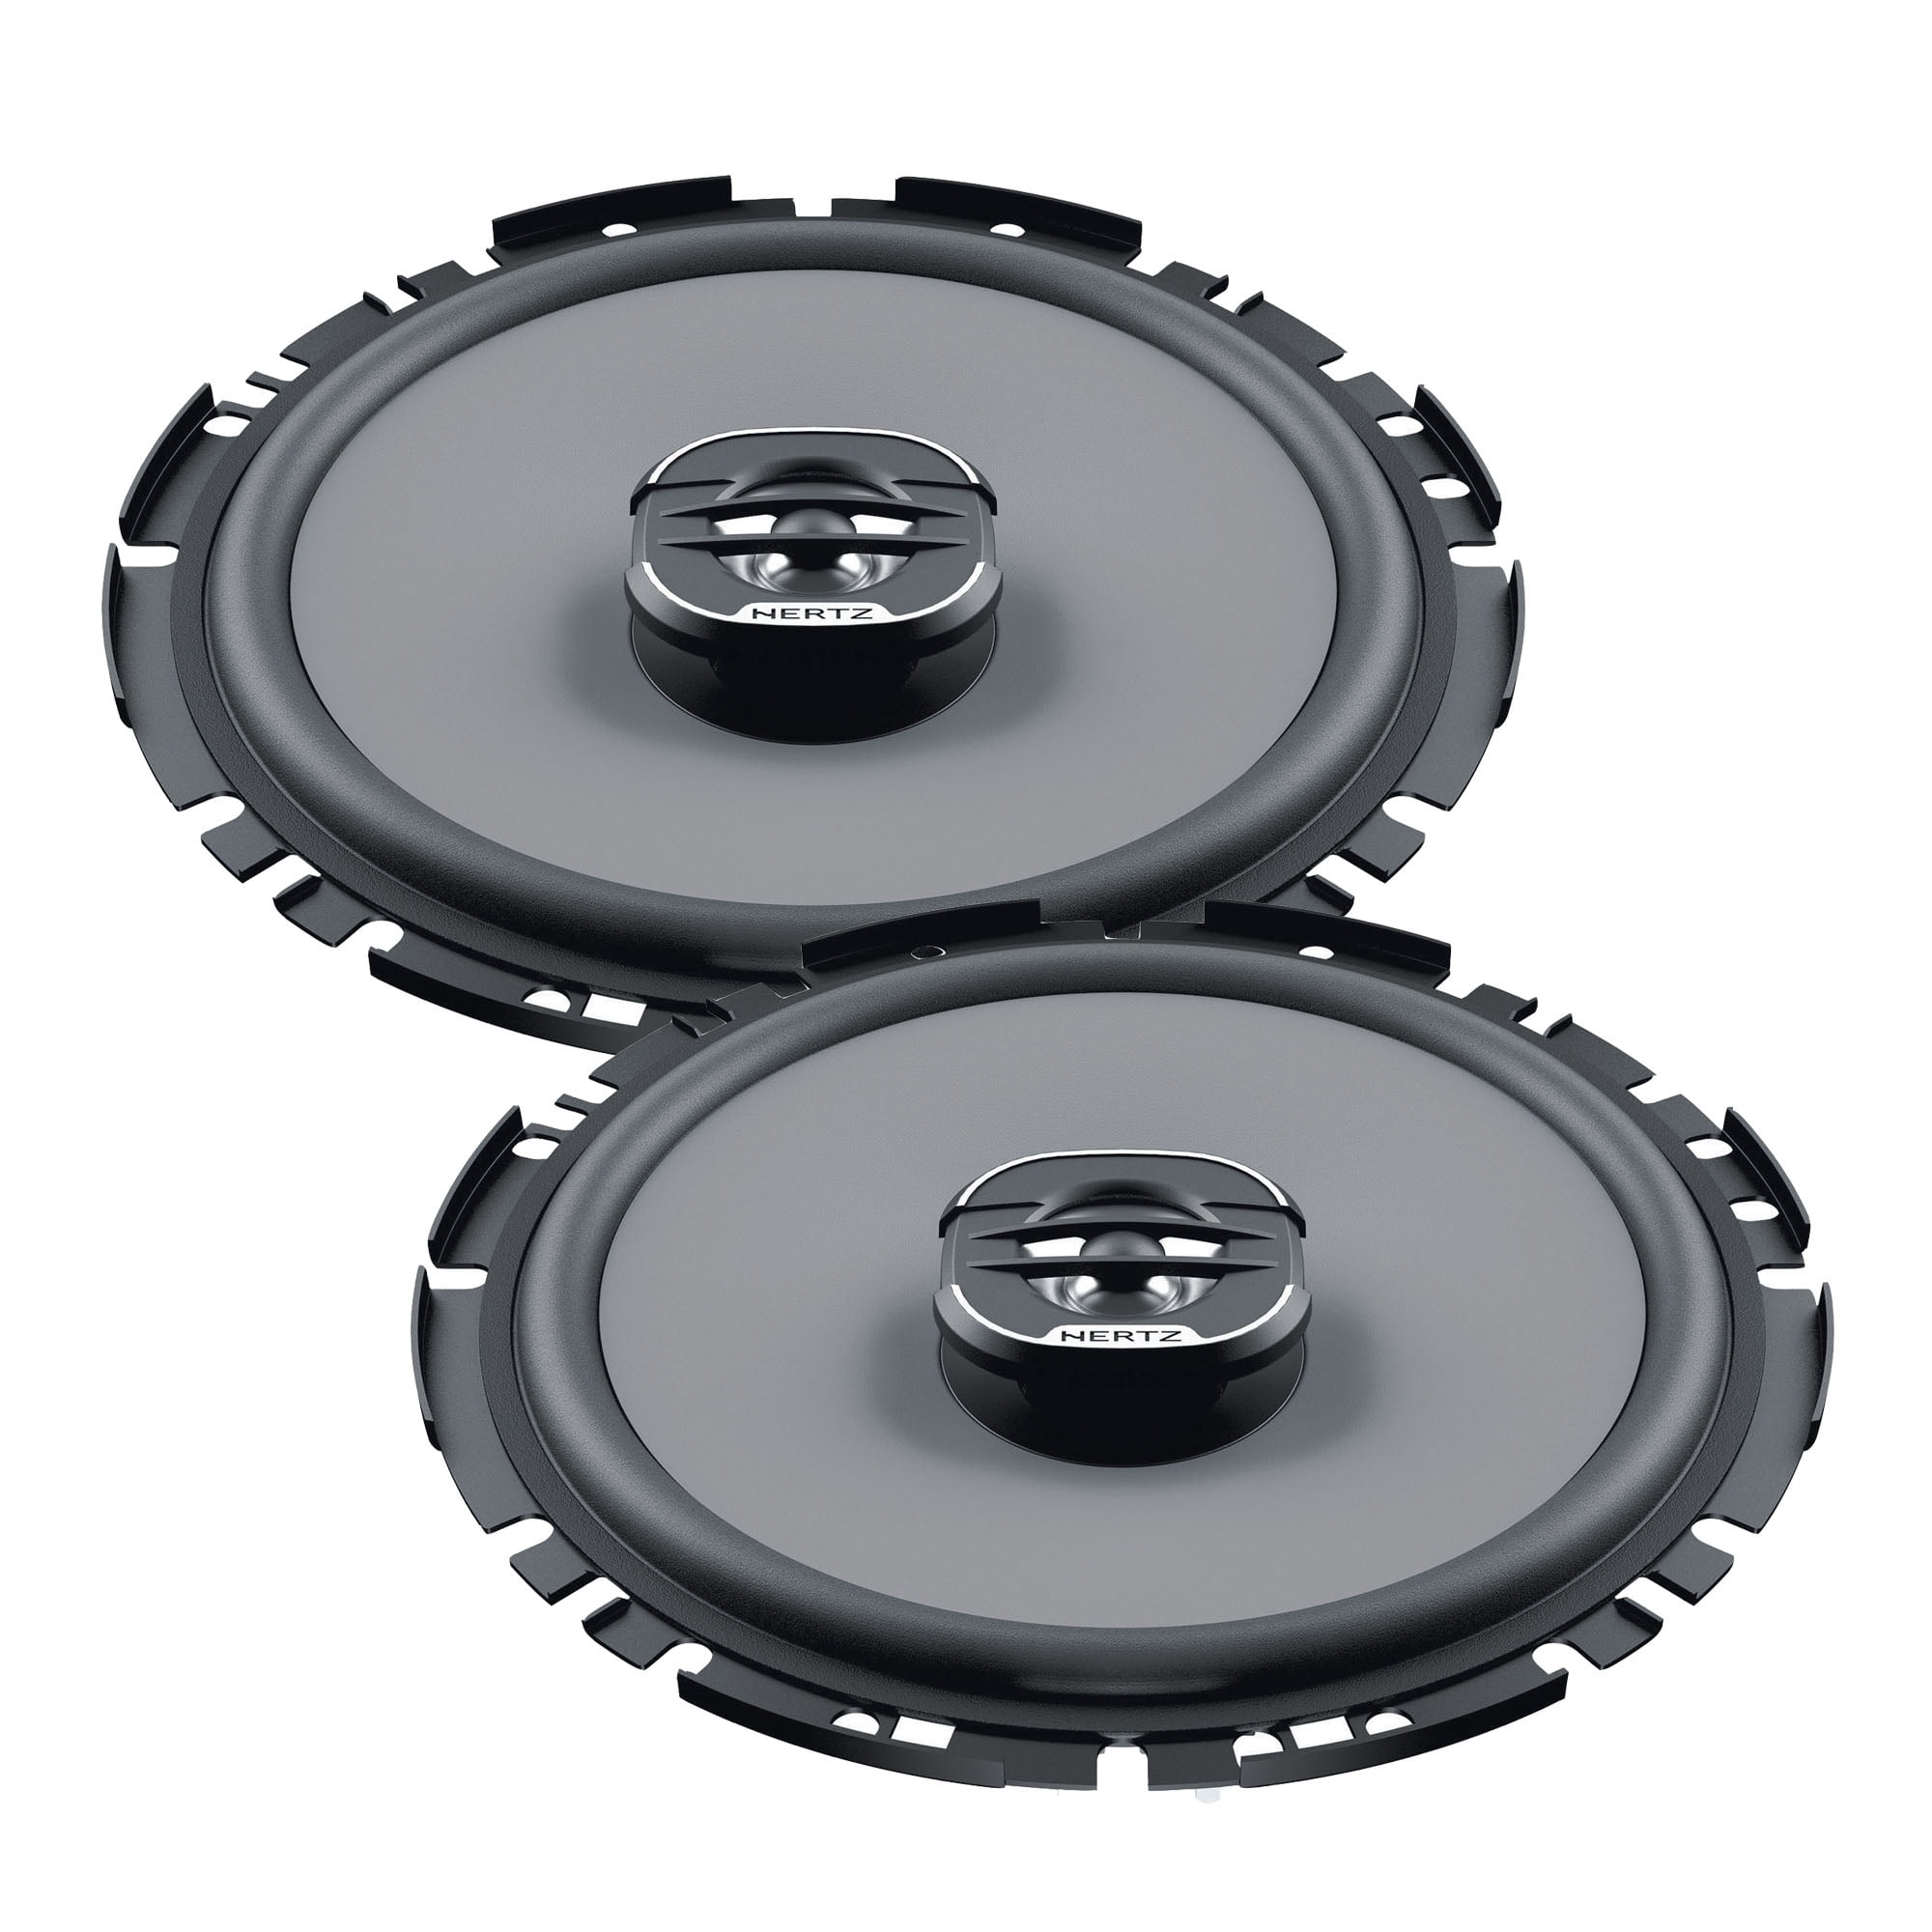 Hertz DCX170.3 Dieci Series 6-3/4” Two Way Coaxial Speakers 